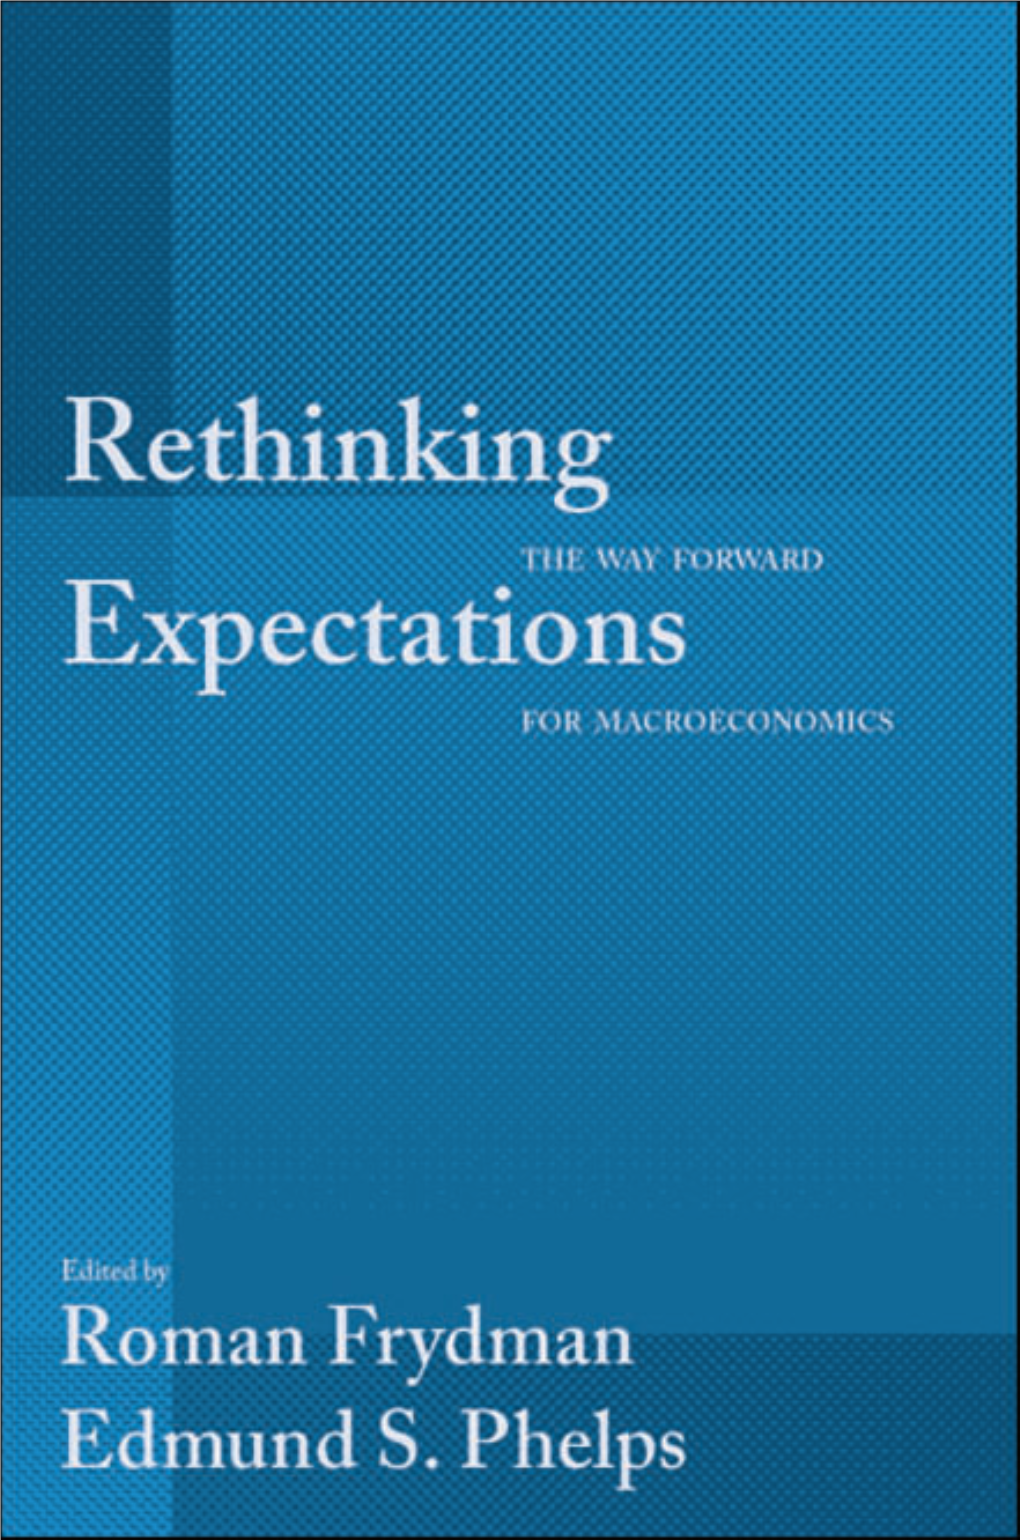 Rethinking Expectations: the Way Forward for Macroeconomics